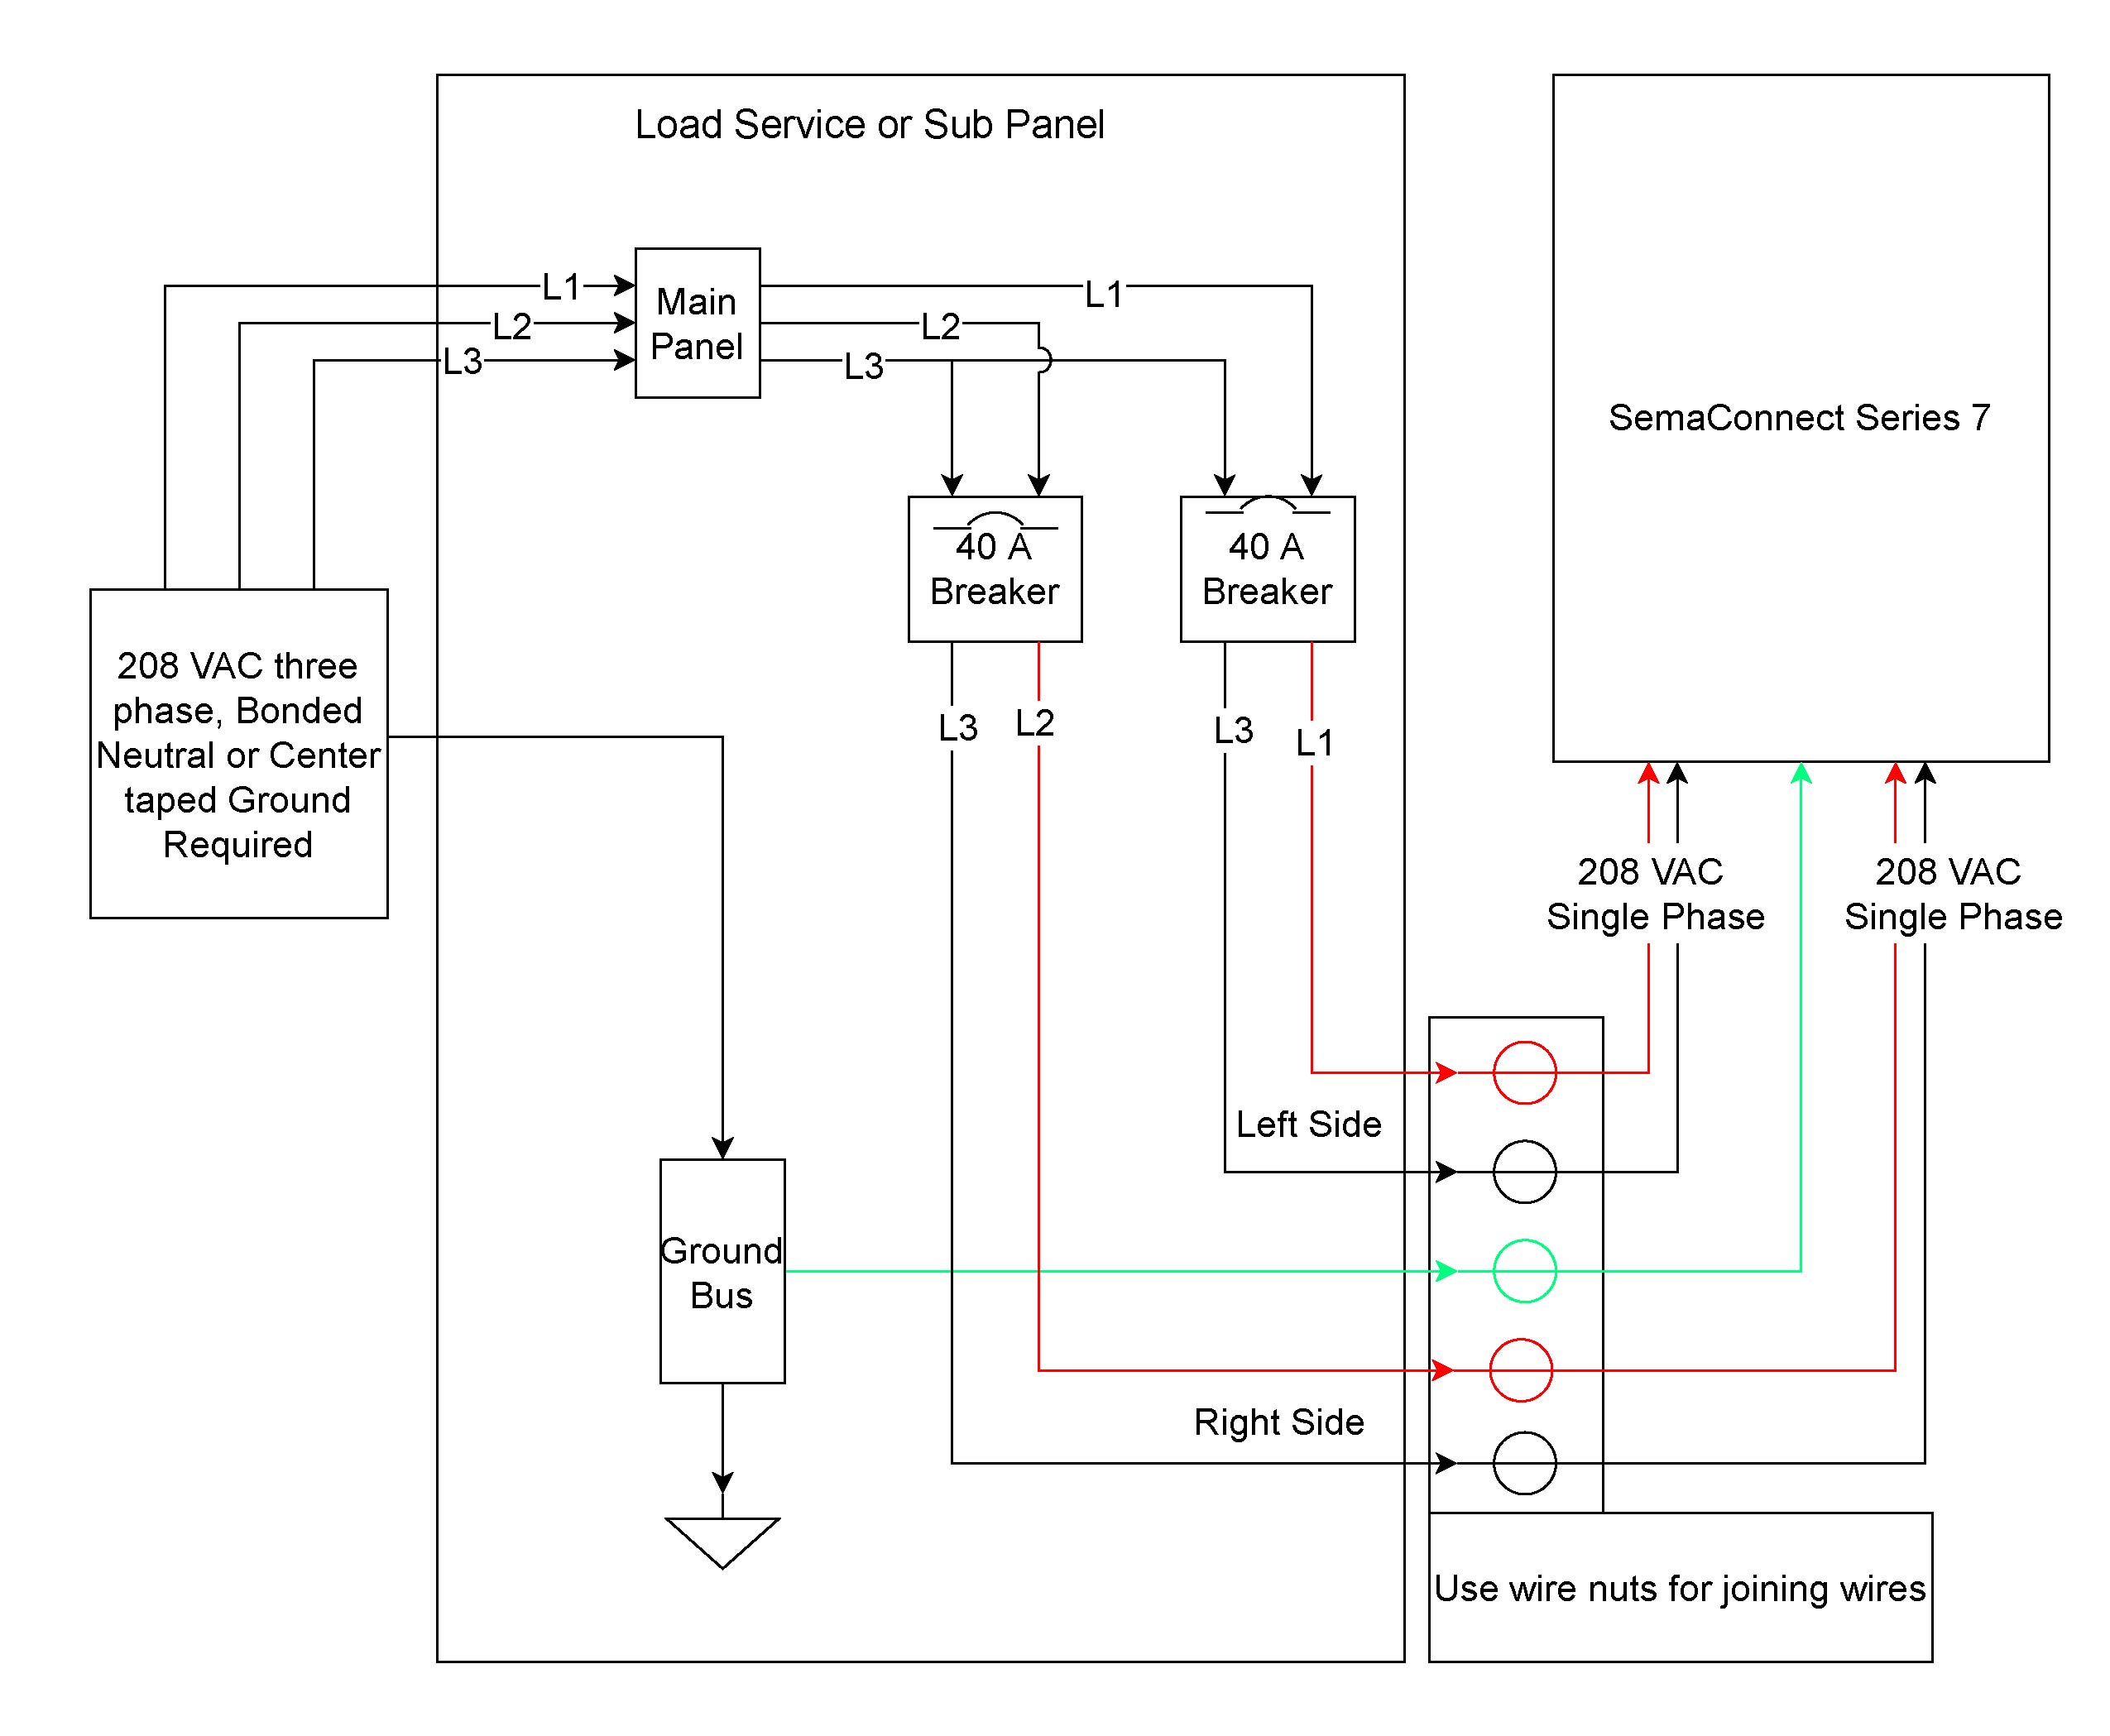 hotpoint refrigerator wiring diagram